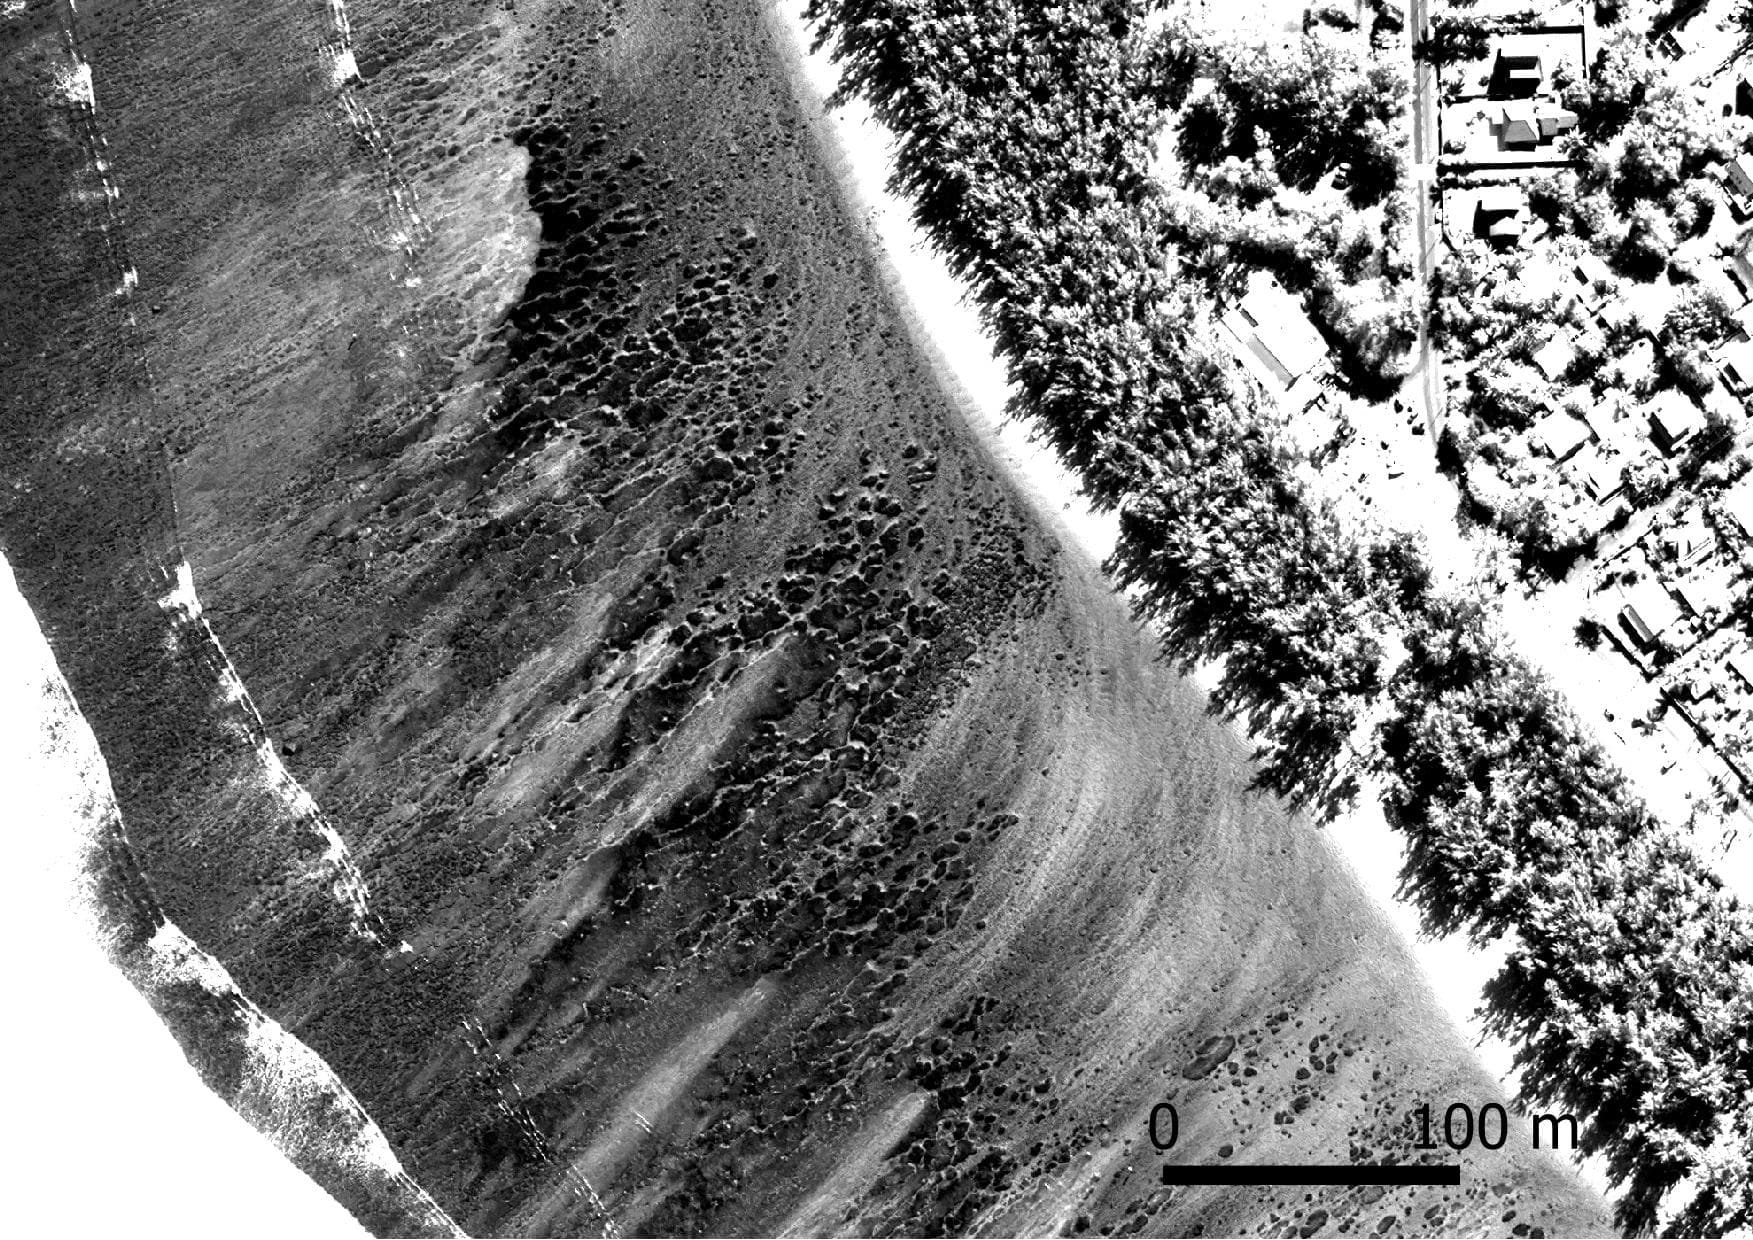 Pléiades Neo Satellite Image - Spectral Analysis -Coral Detection